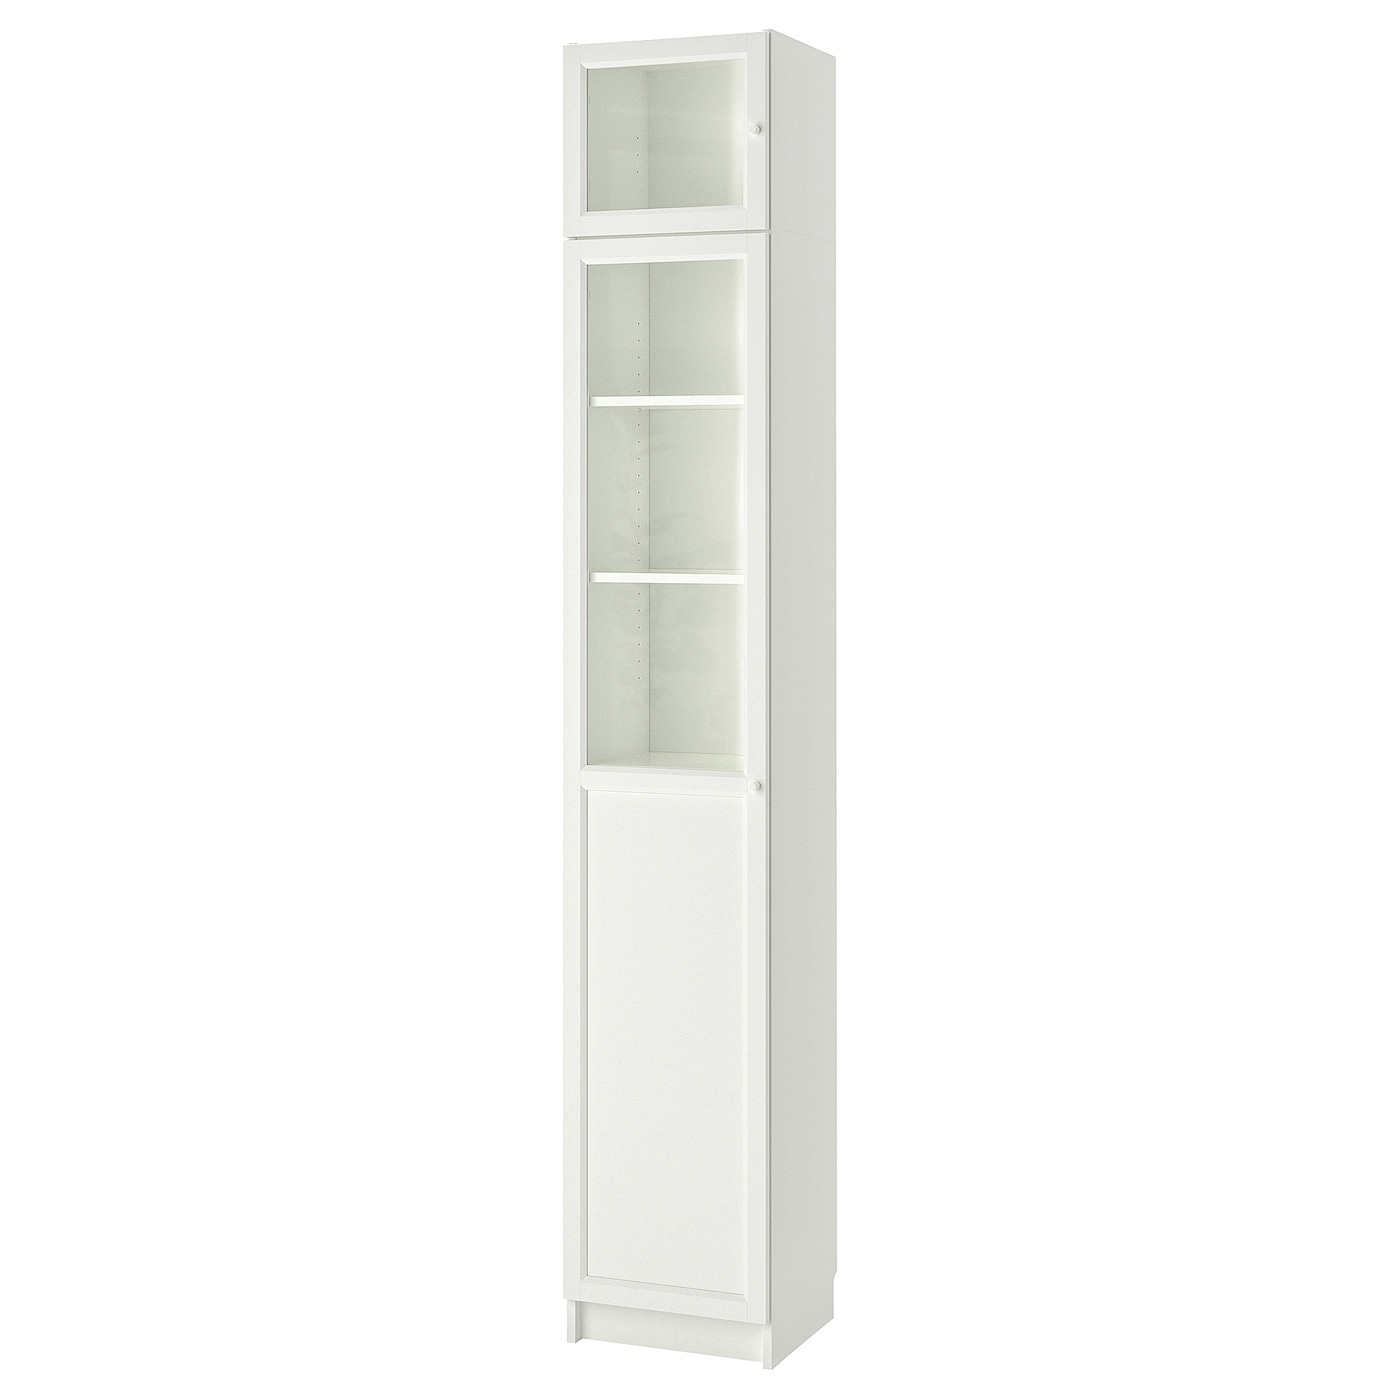 Стеллаж - IKEA BILLY, 40х42х237 см, белый/стекло, БИЛЛИ ИКЕА